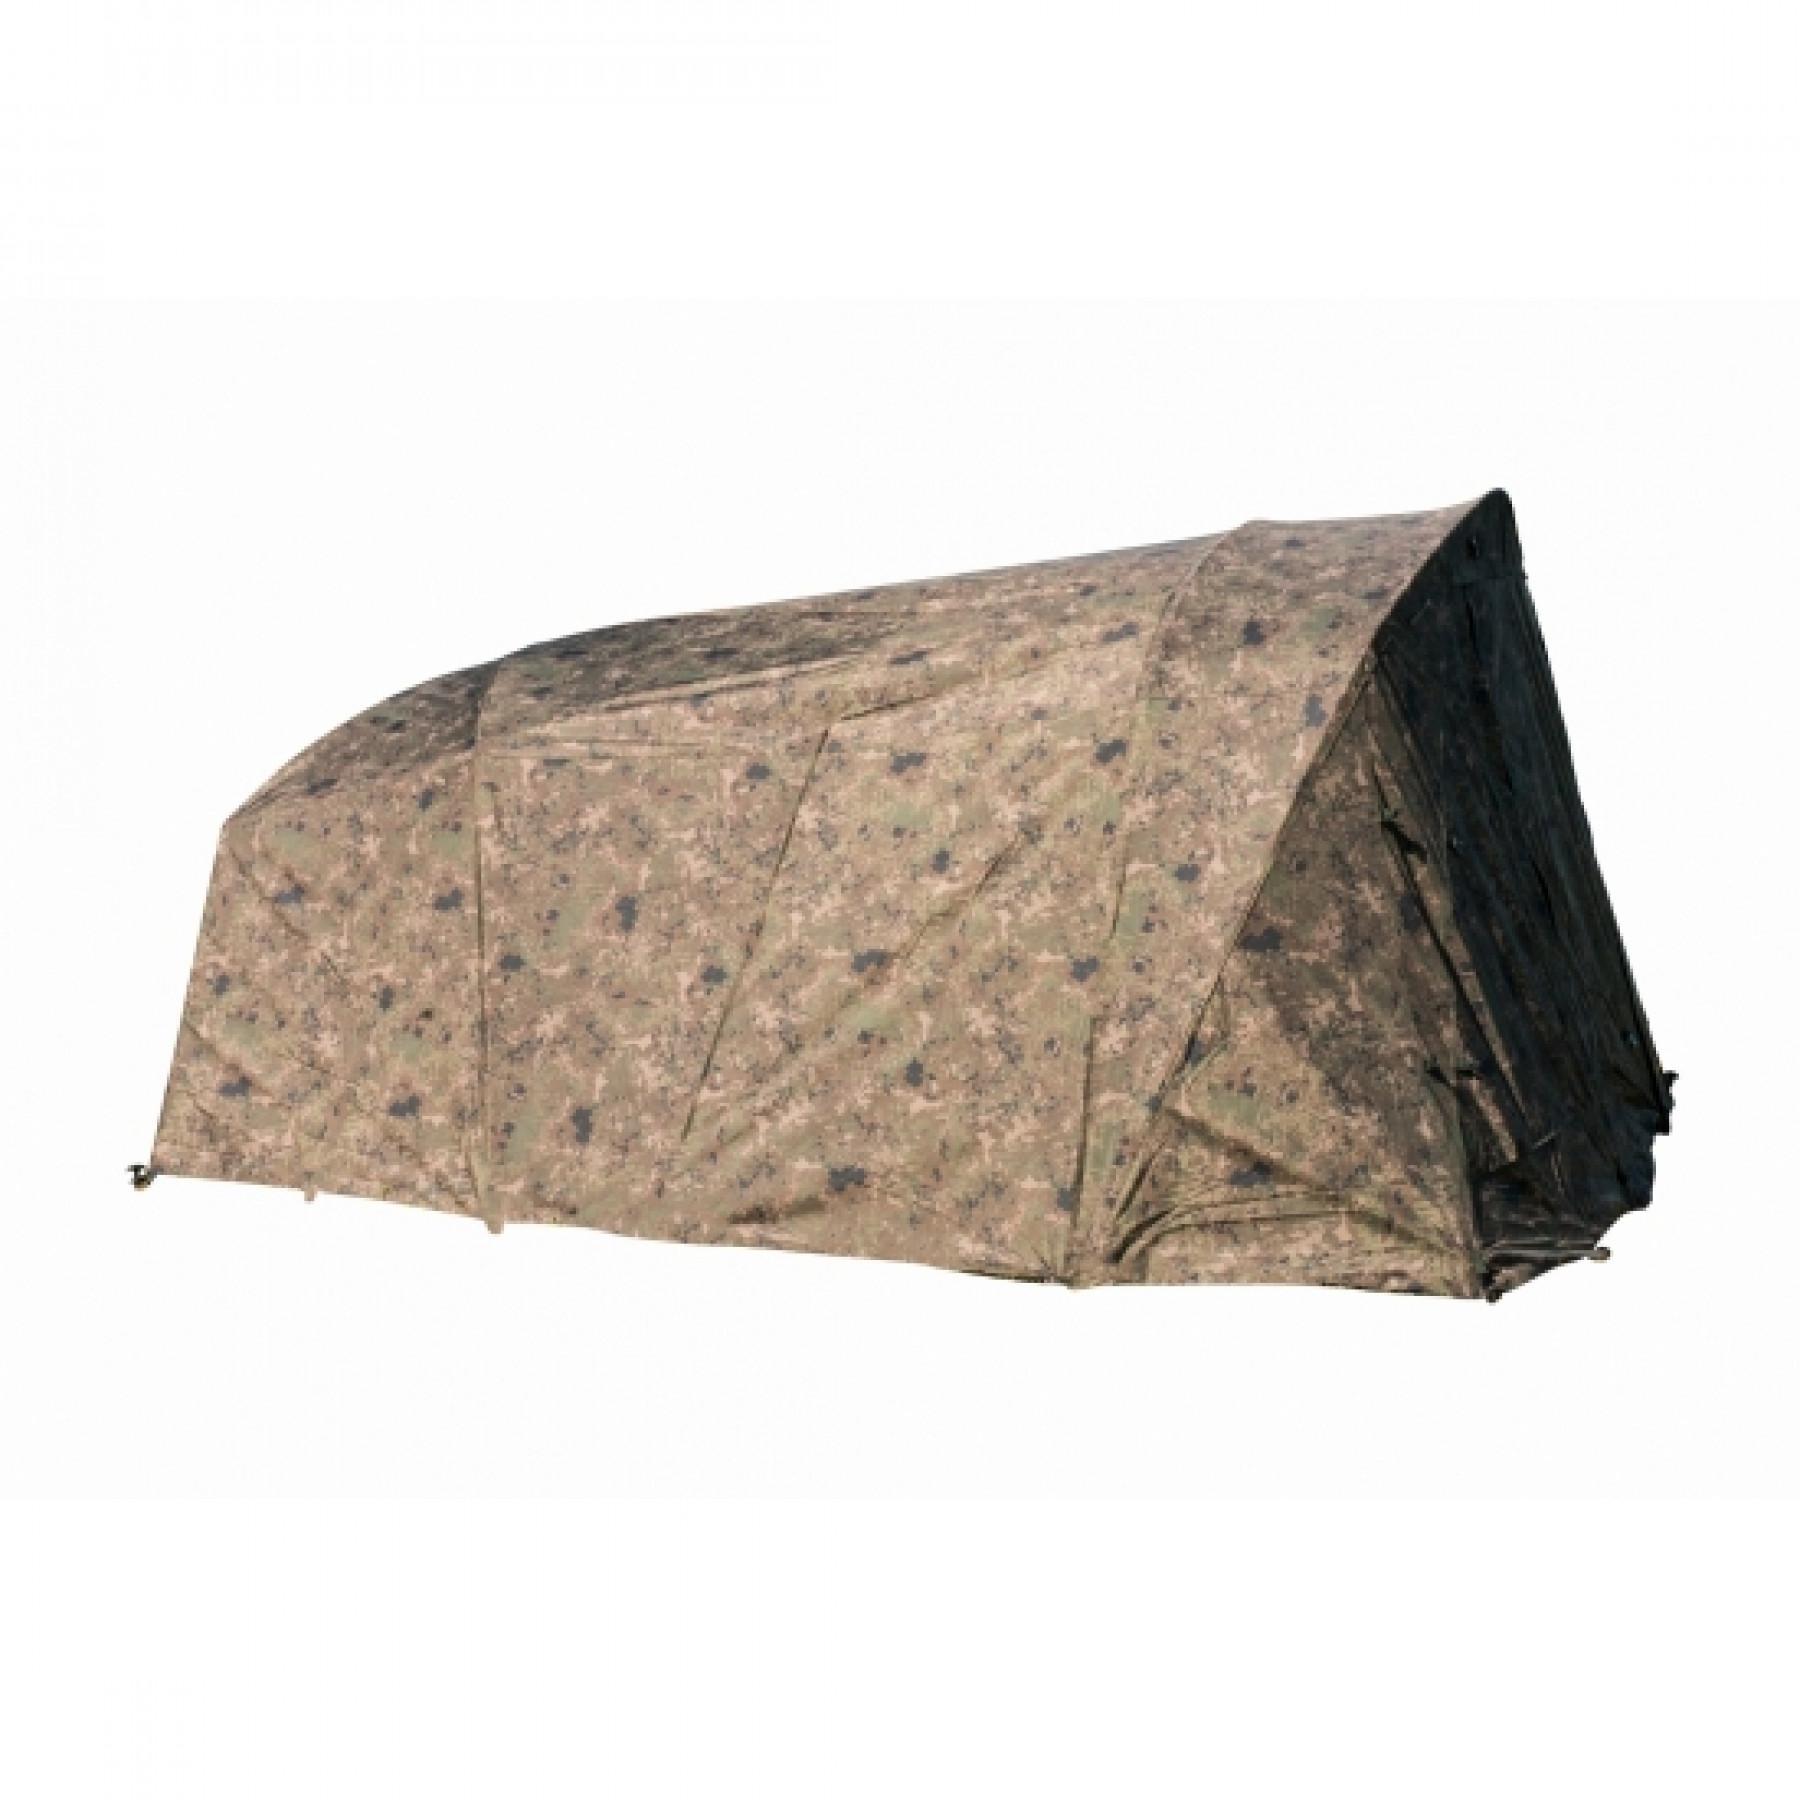 Shelter Titan Extreme Canopy XL